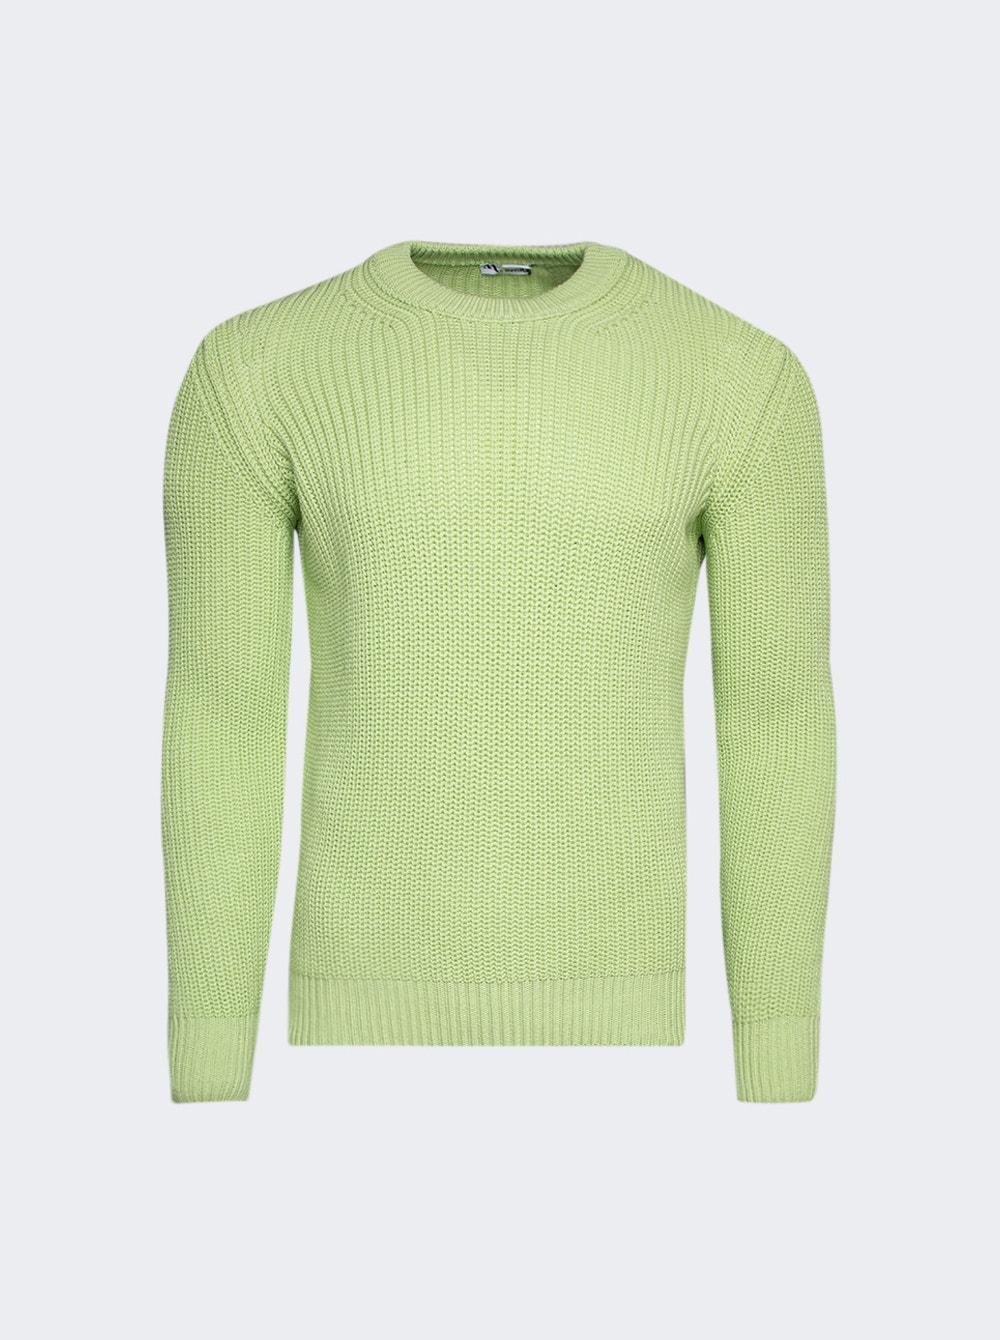 Striped Crewneck Sweater Green by DOPPIAA